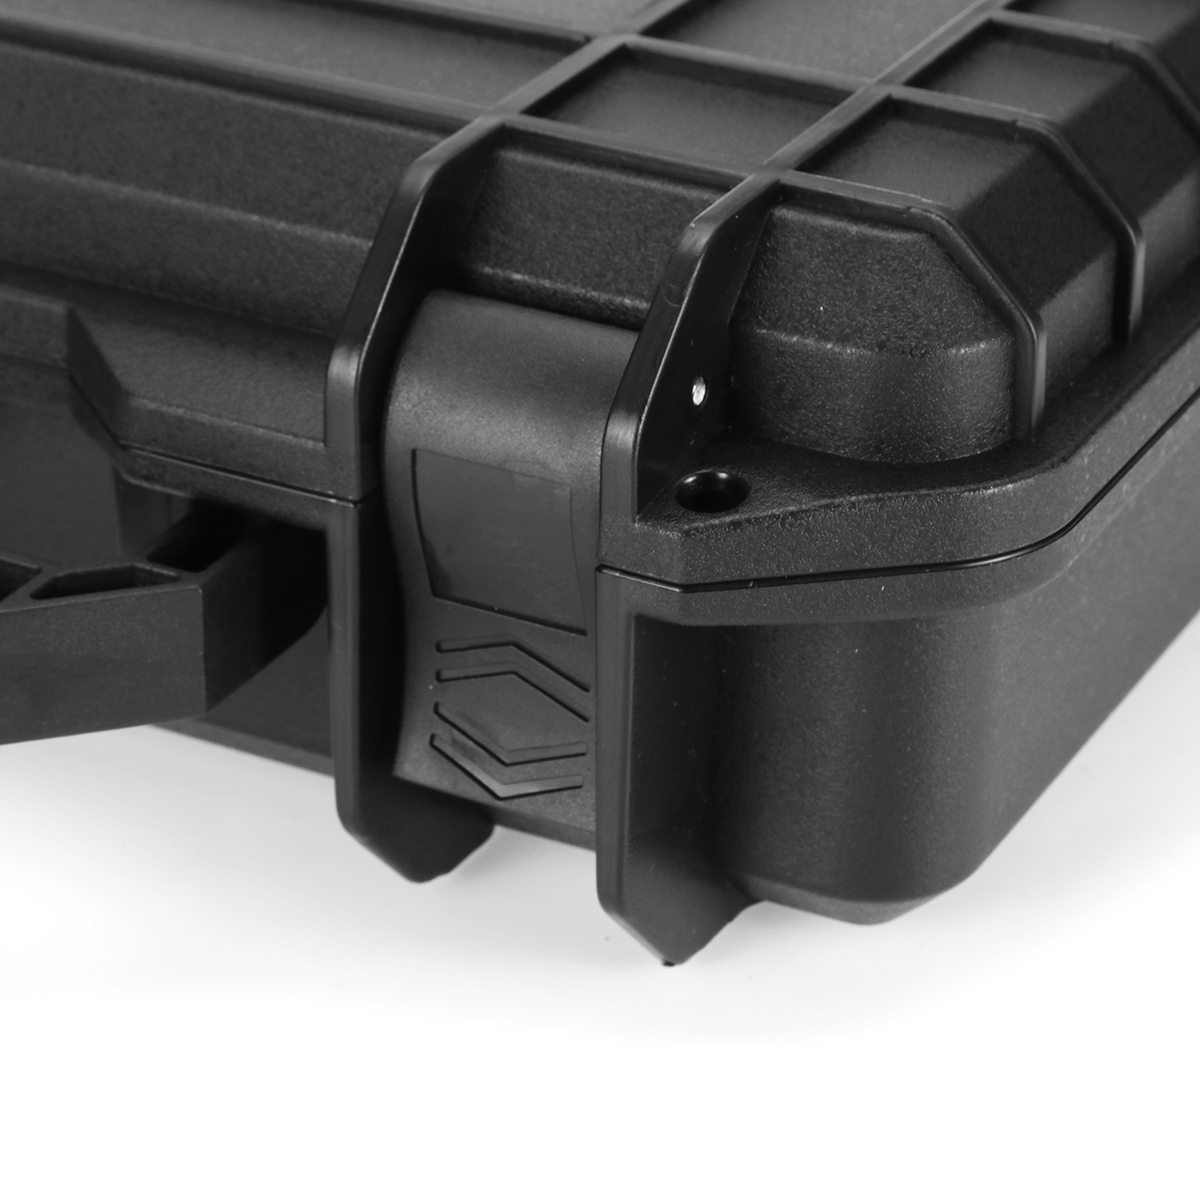 Waterproof-Hard-Carry-Case-Tool-Kits-Impact-Resistant-Shockproof-Storage-Box-New-1658756-9